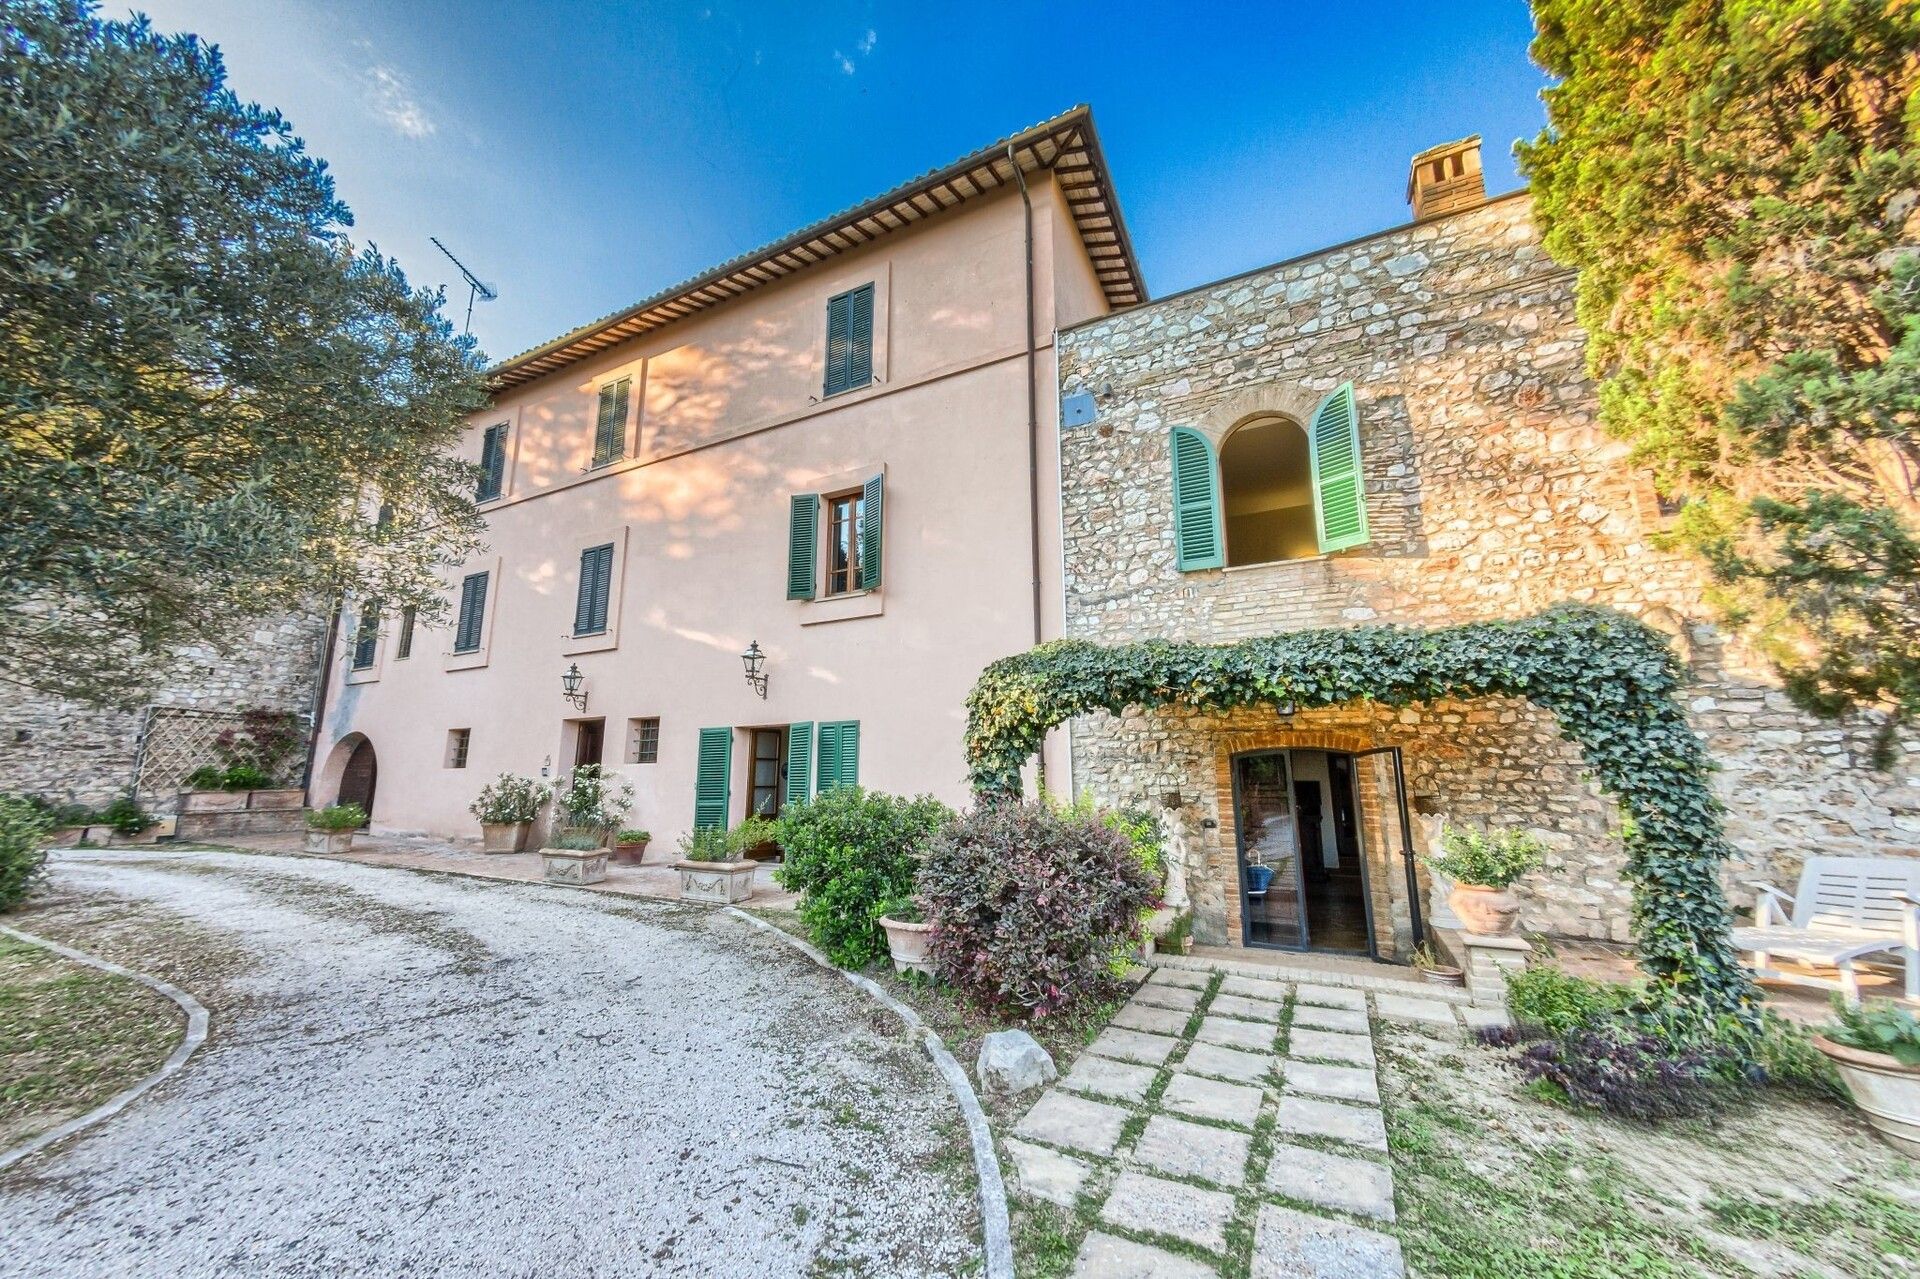 For sale villa in quiet zone Spello Umbria